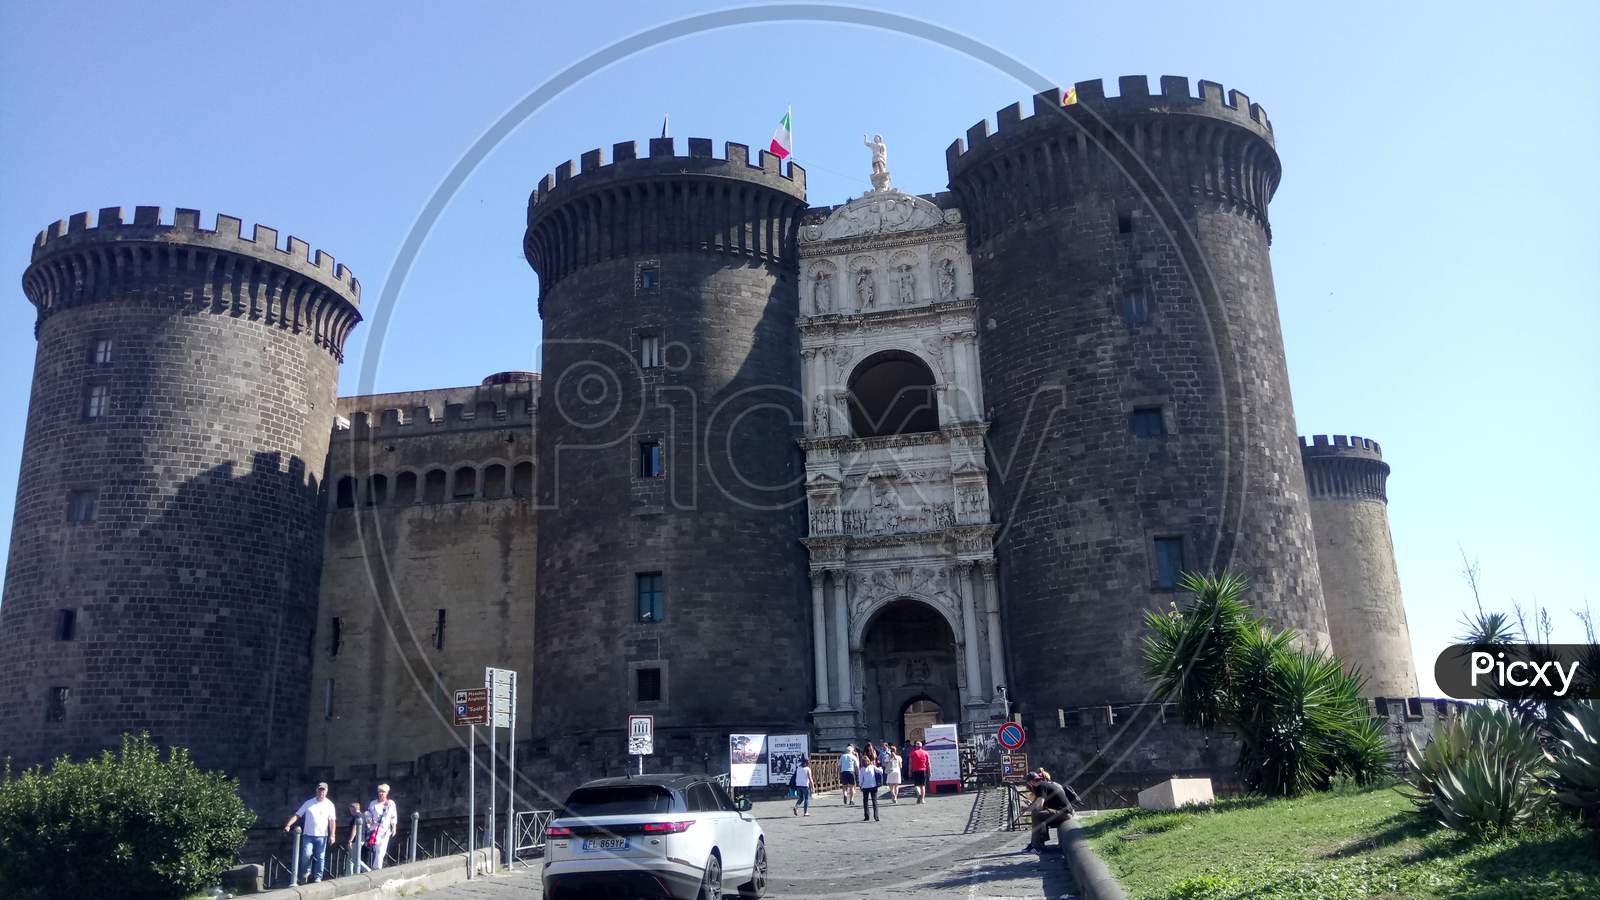 Castel Nuovo castle, Naples, Italy